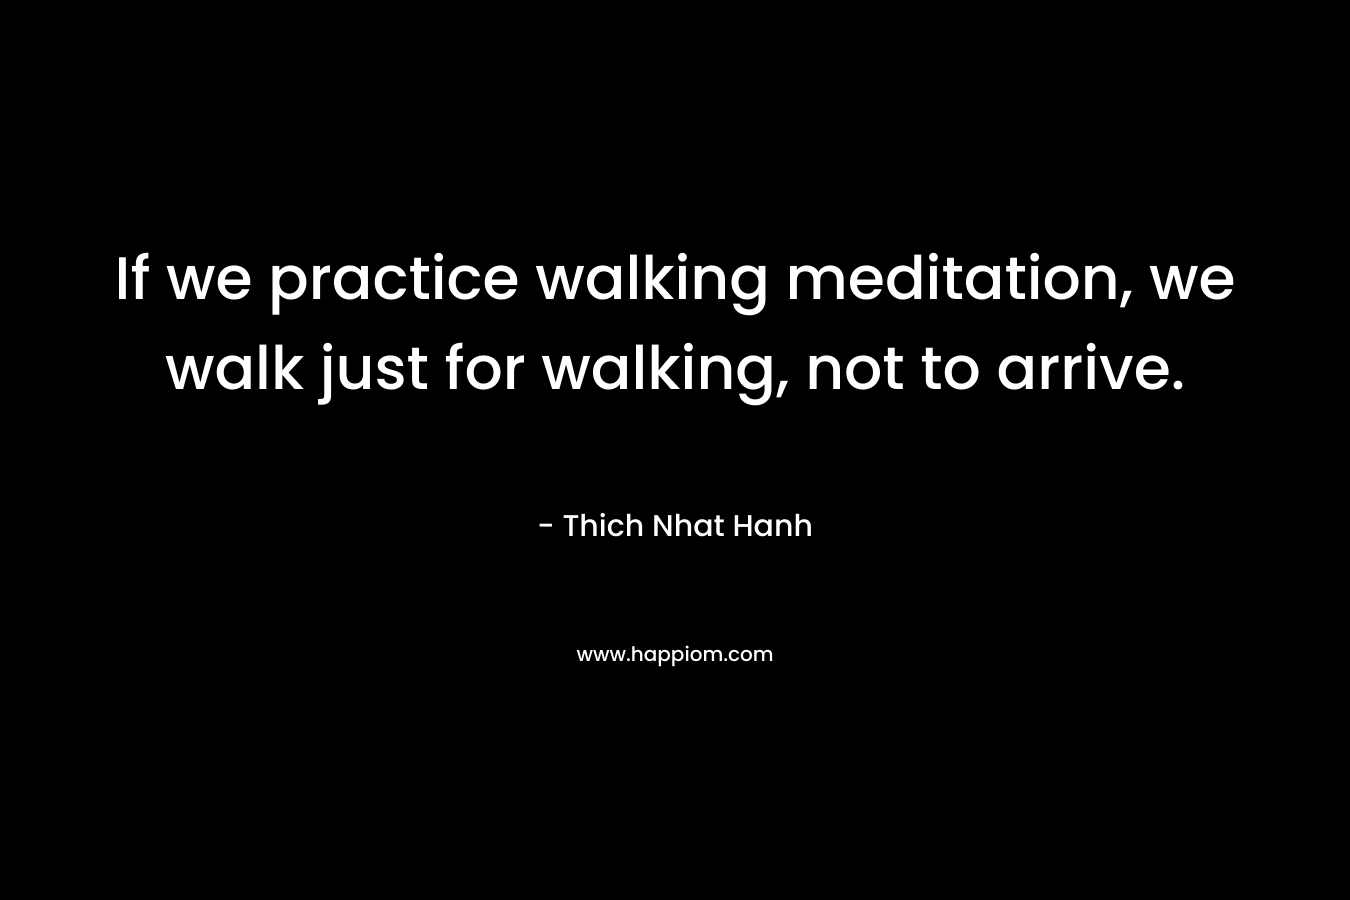 If we practice walking meditation, we walk just for walking, not to arrive.